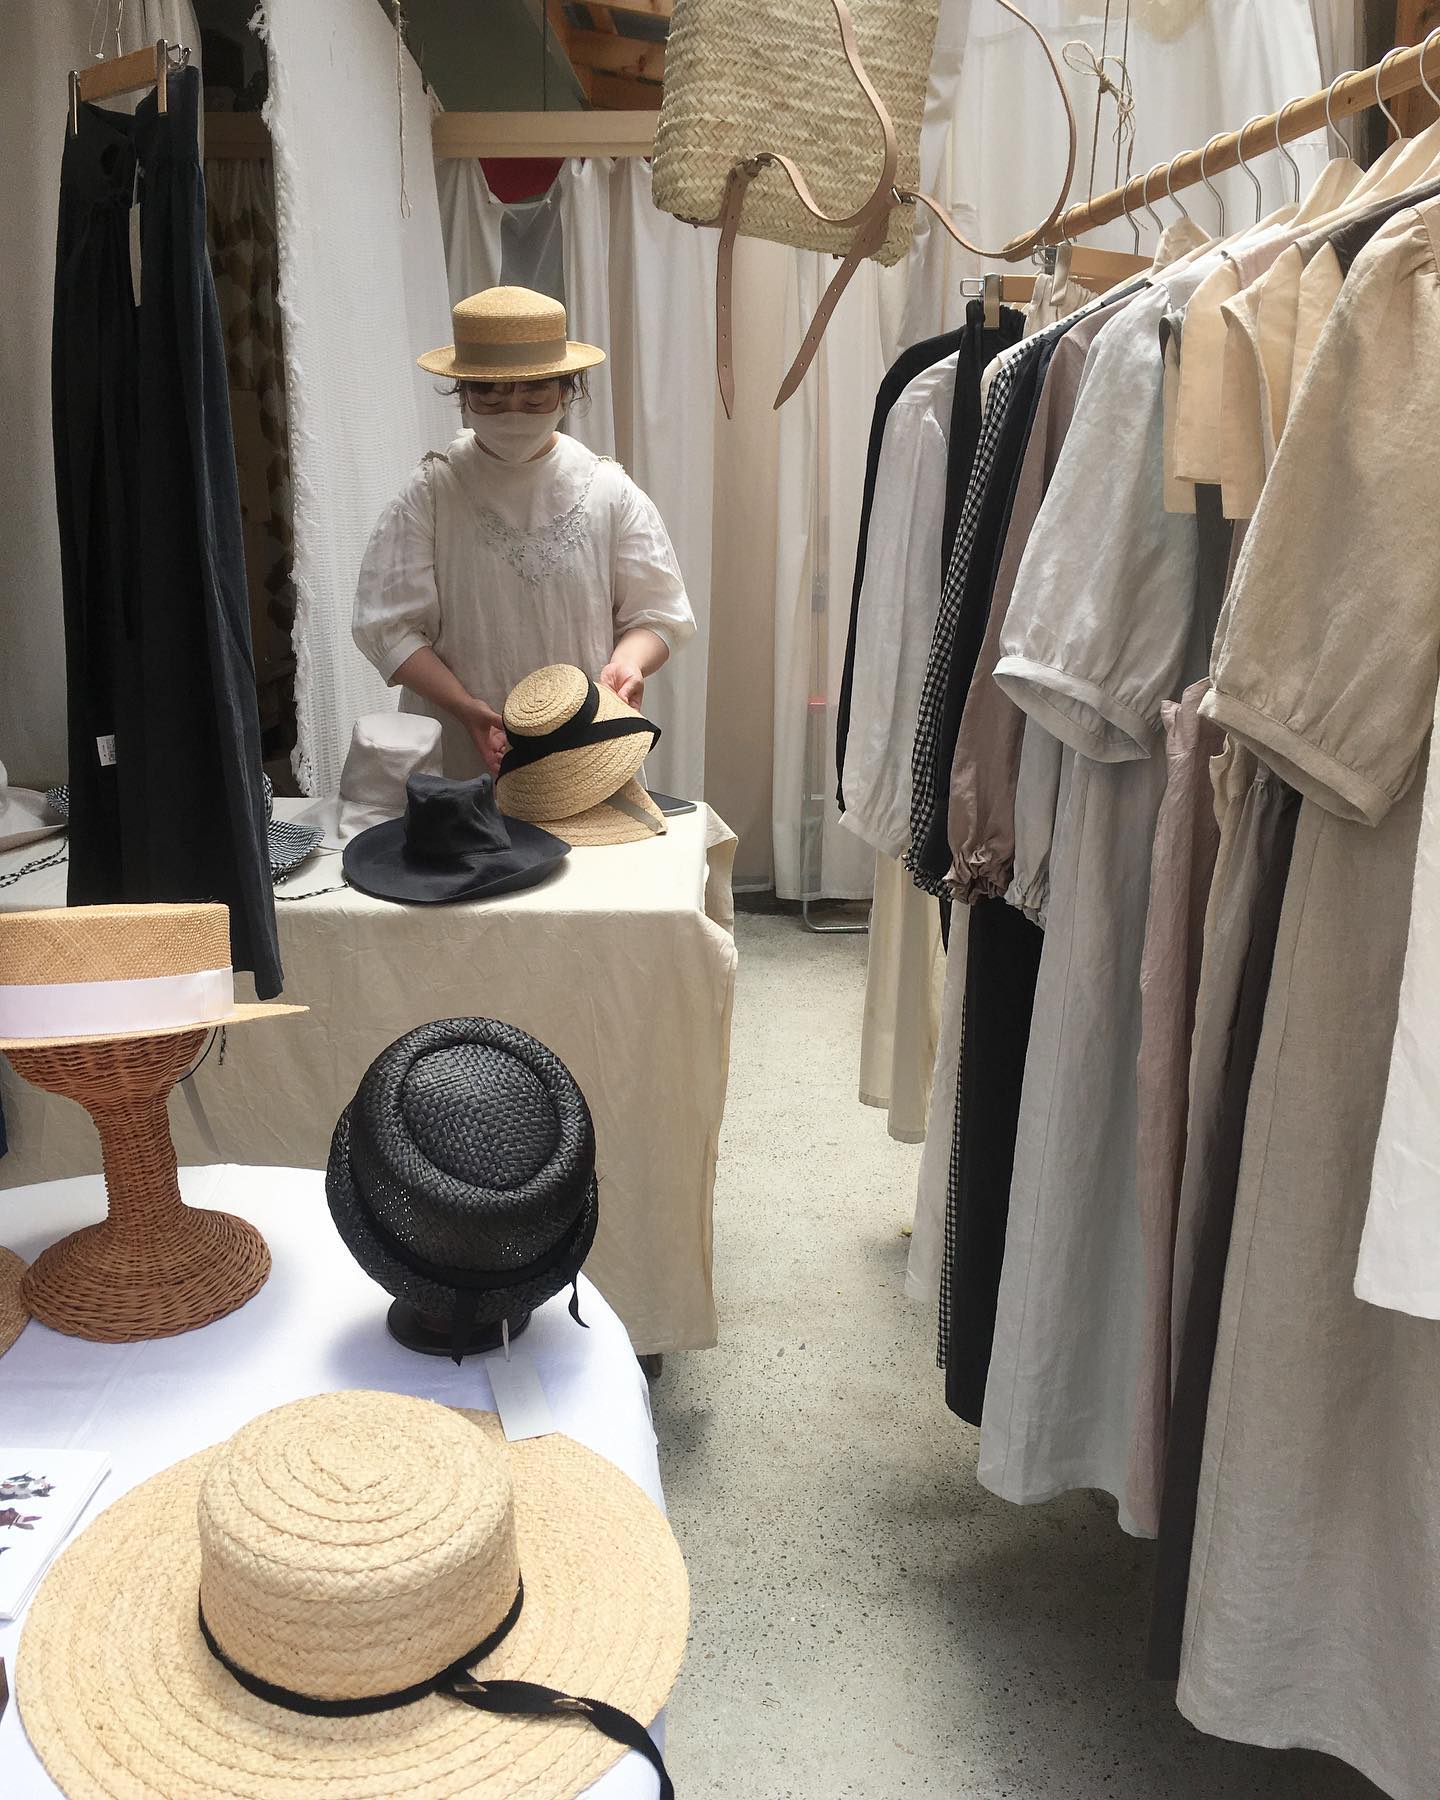 yadorigi 出張出店in katakana自由が丘店さん@yadorigi8 @katakana_jiyugaoka 本日最終日です今日は梅雨の晴れまマルシェ日和のいい天気で気持ちいいです夏本番前にお気に入りの帽子や洋服を選びに是非お待ちしています